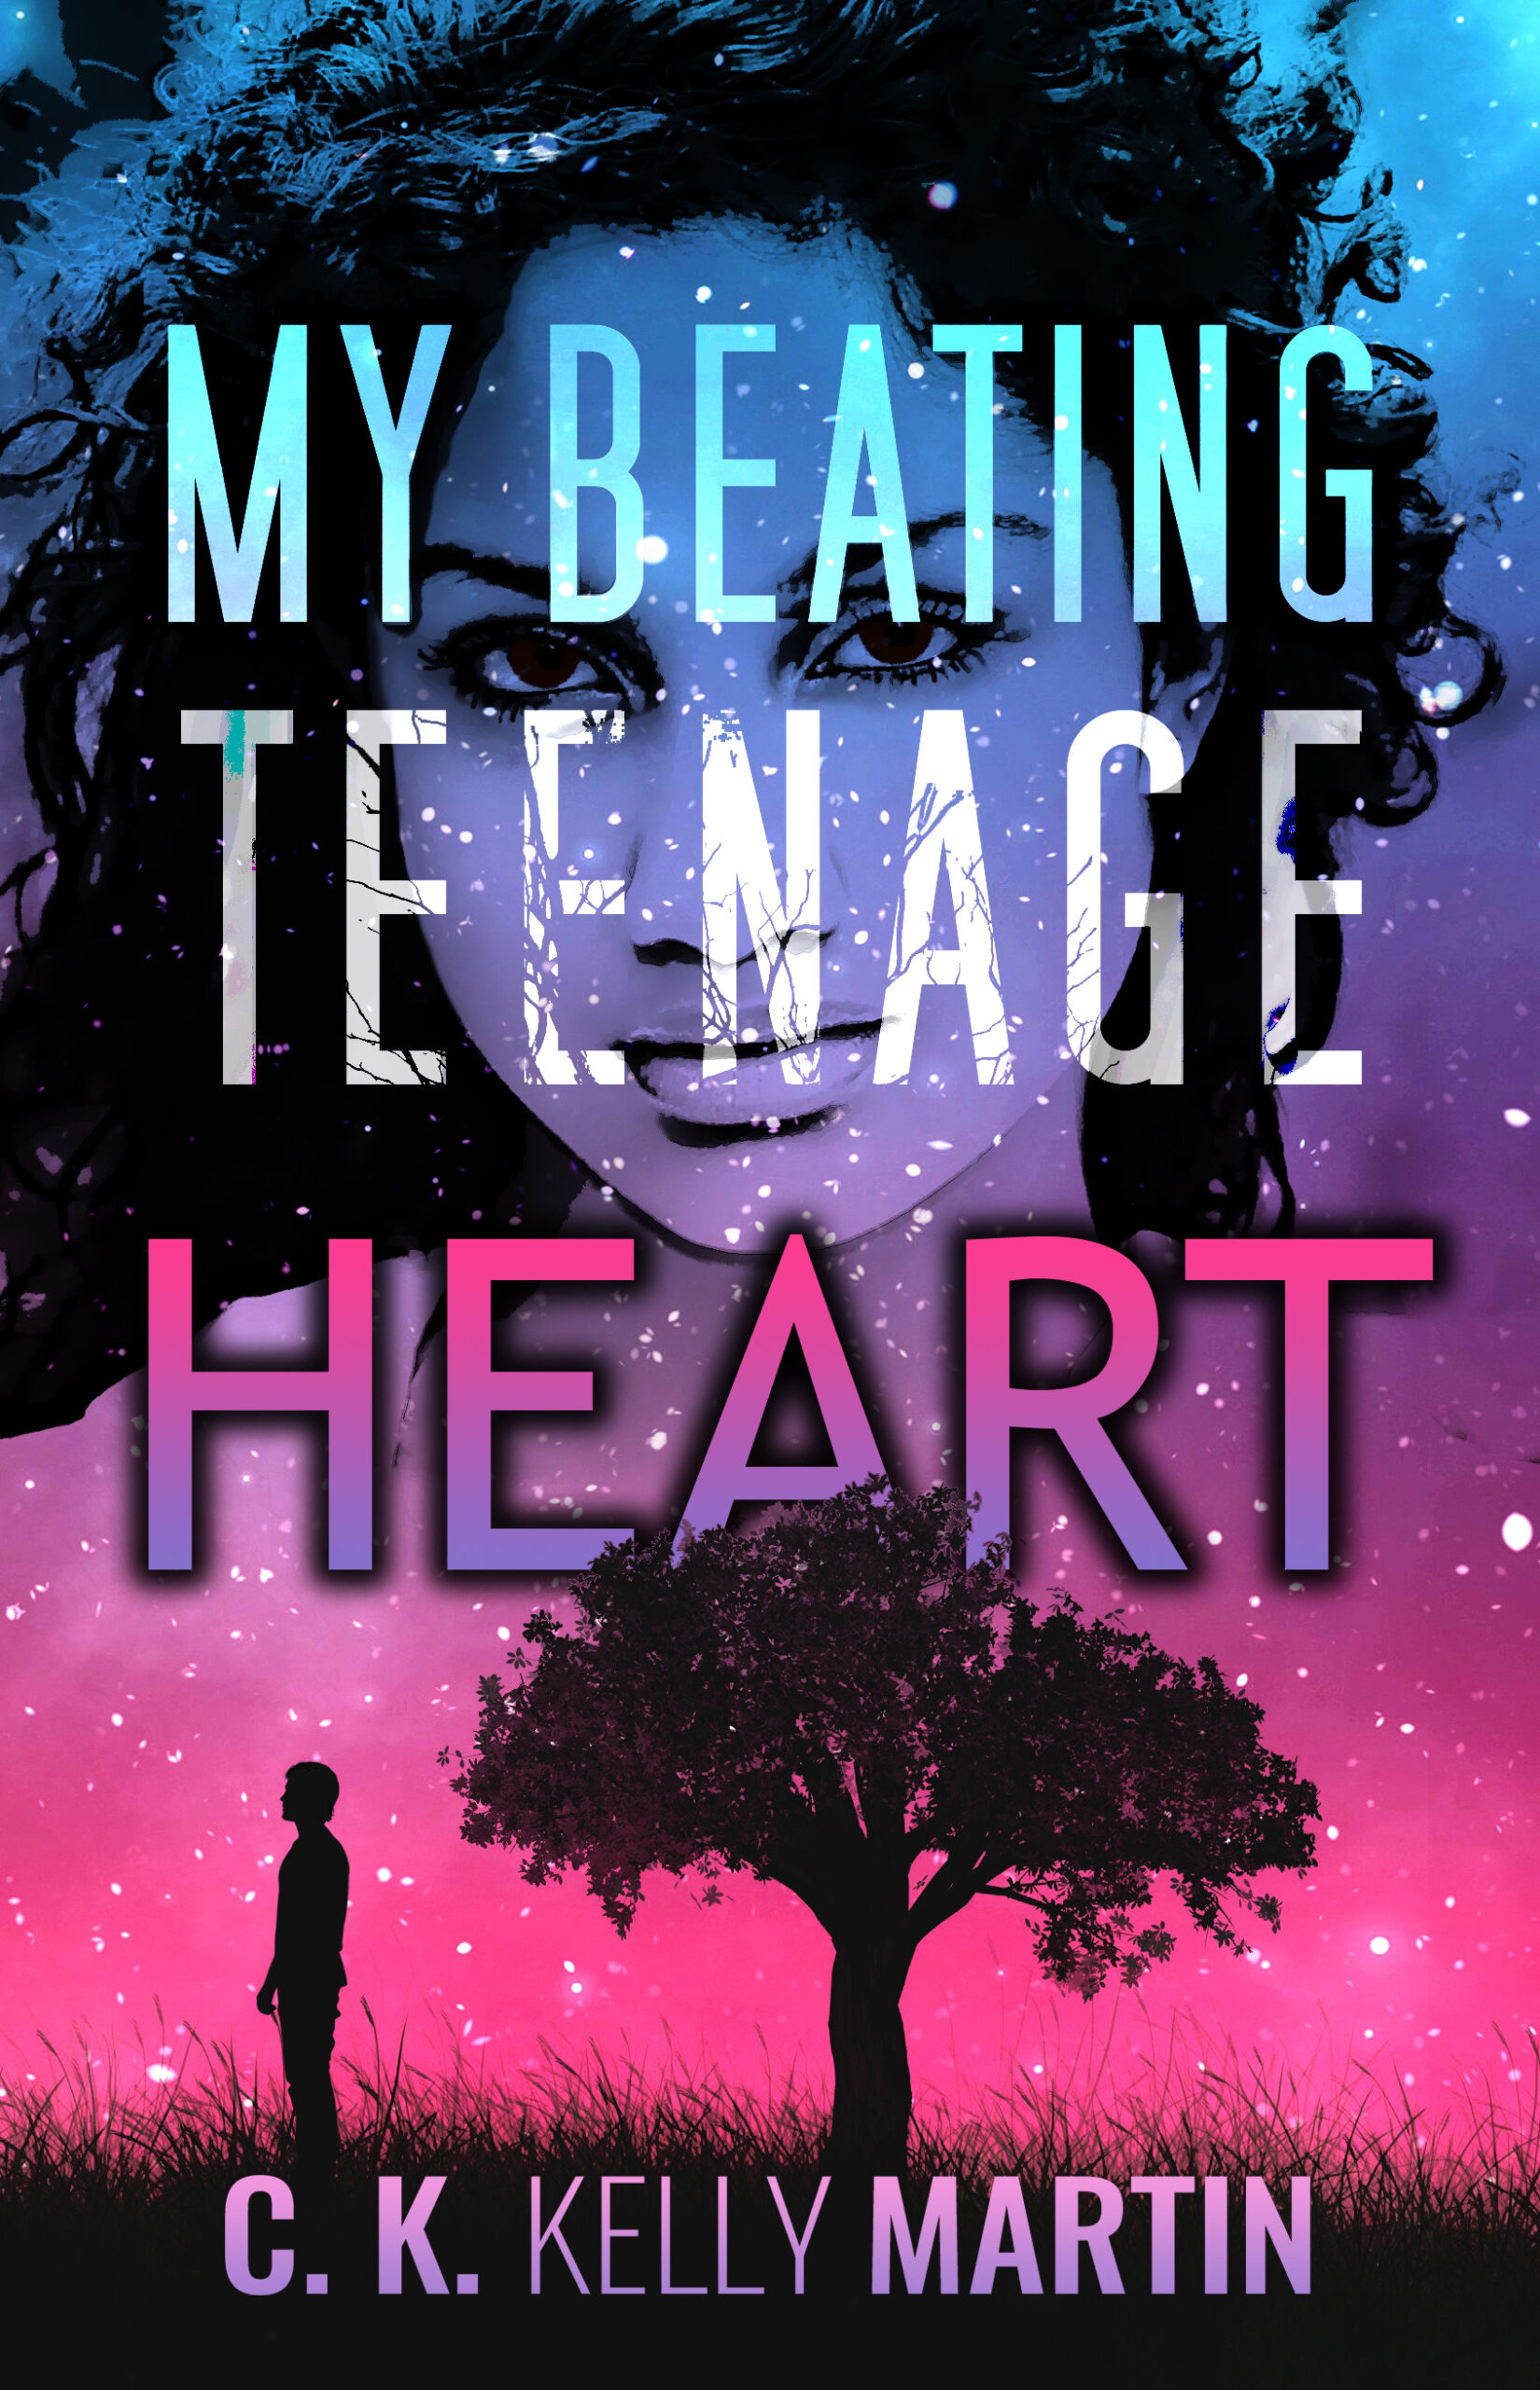 My Beating Teenage Heart